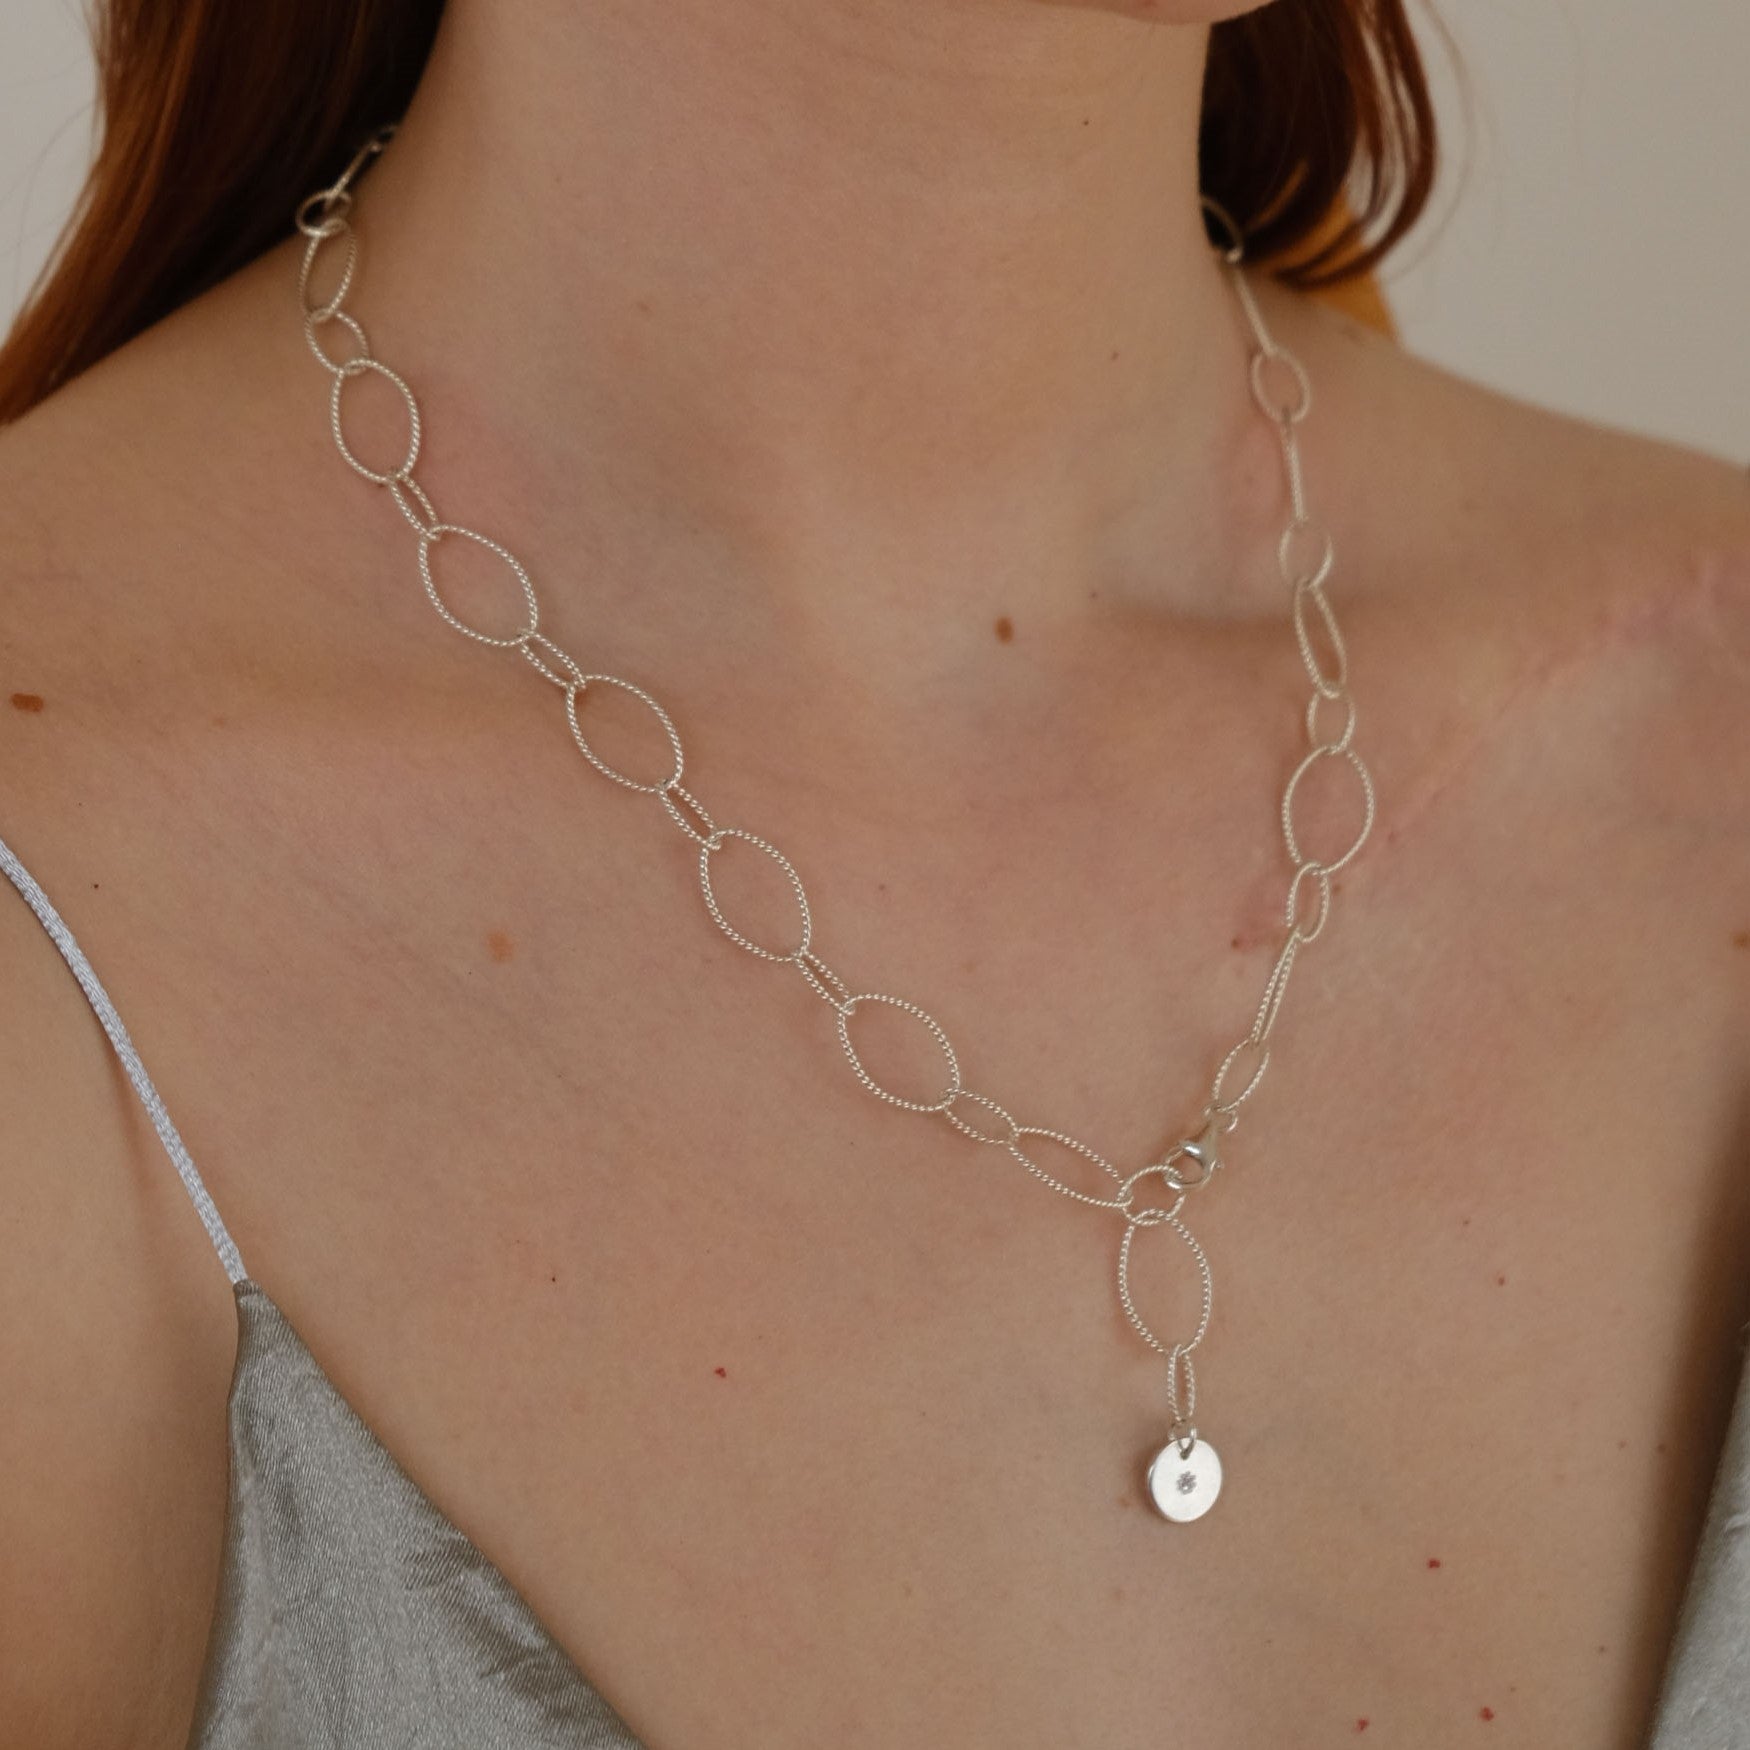 Silver Twist Chain Necklace